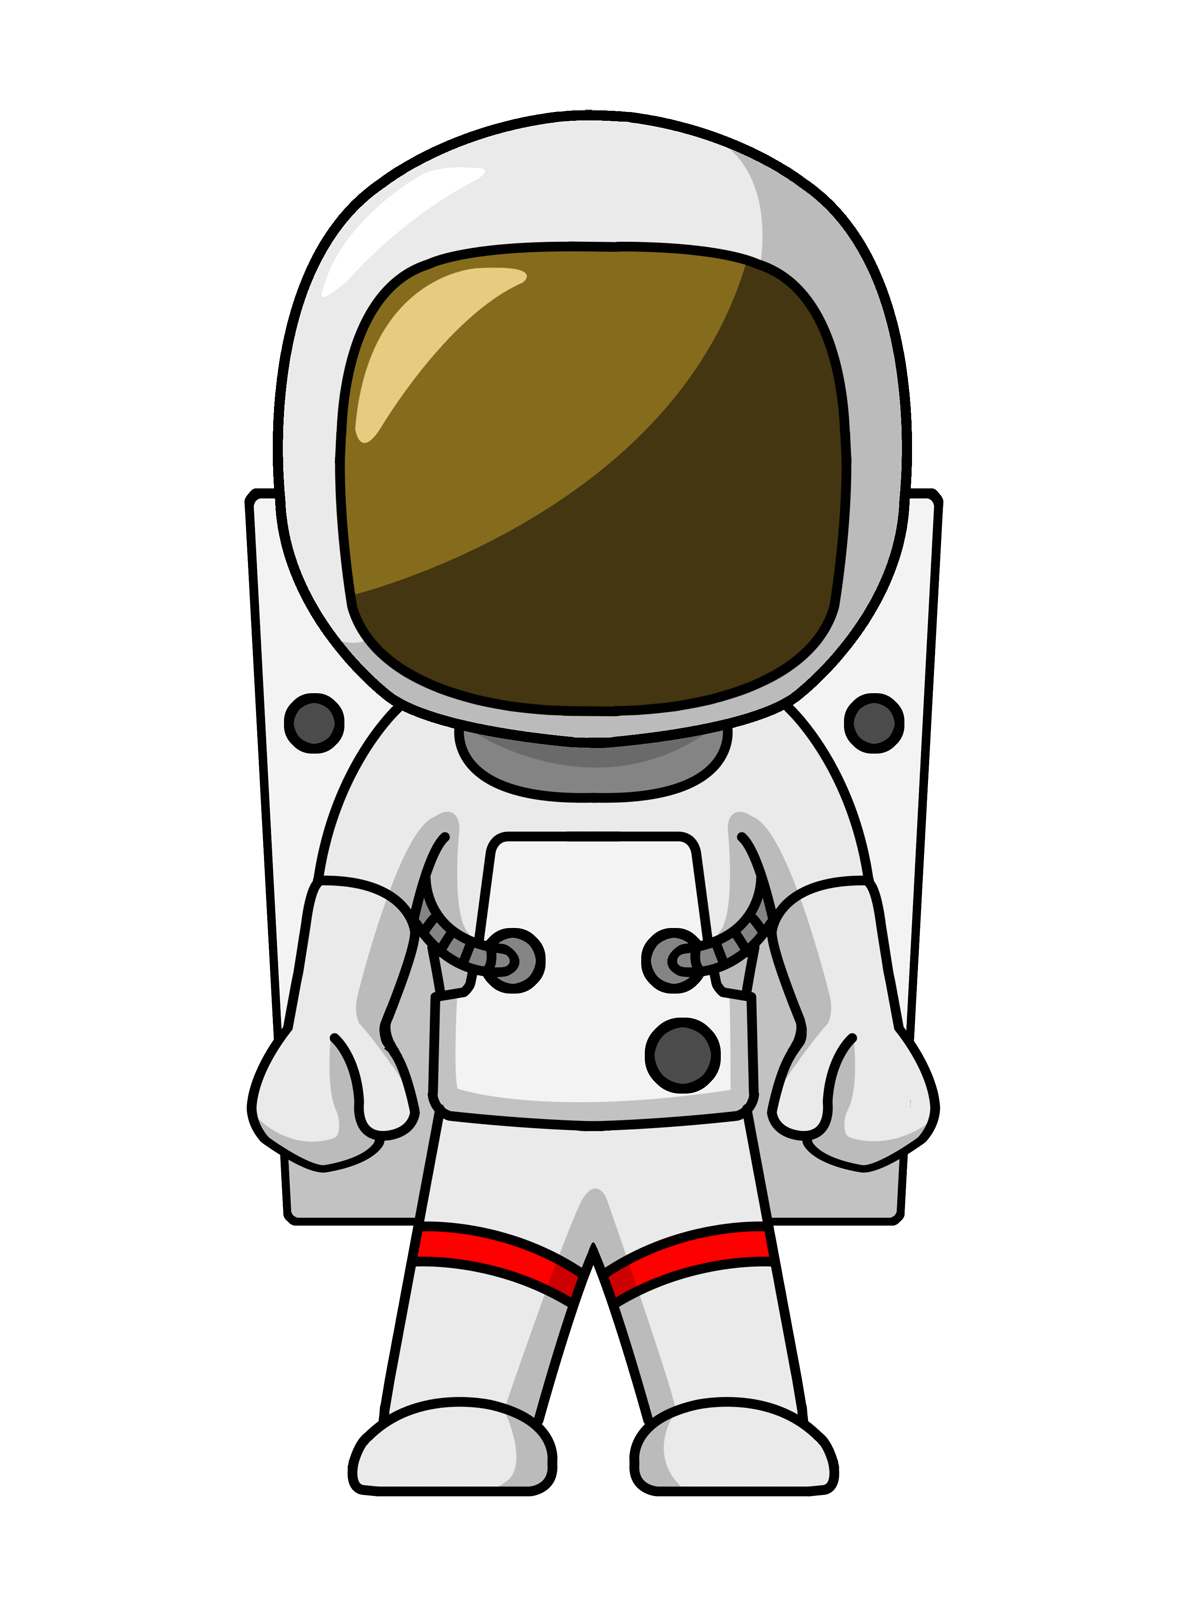 Cosmonaut space suit clipart - Clipground